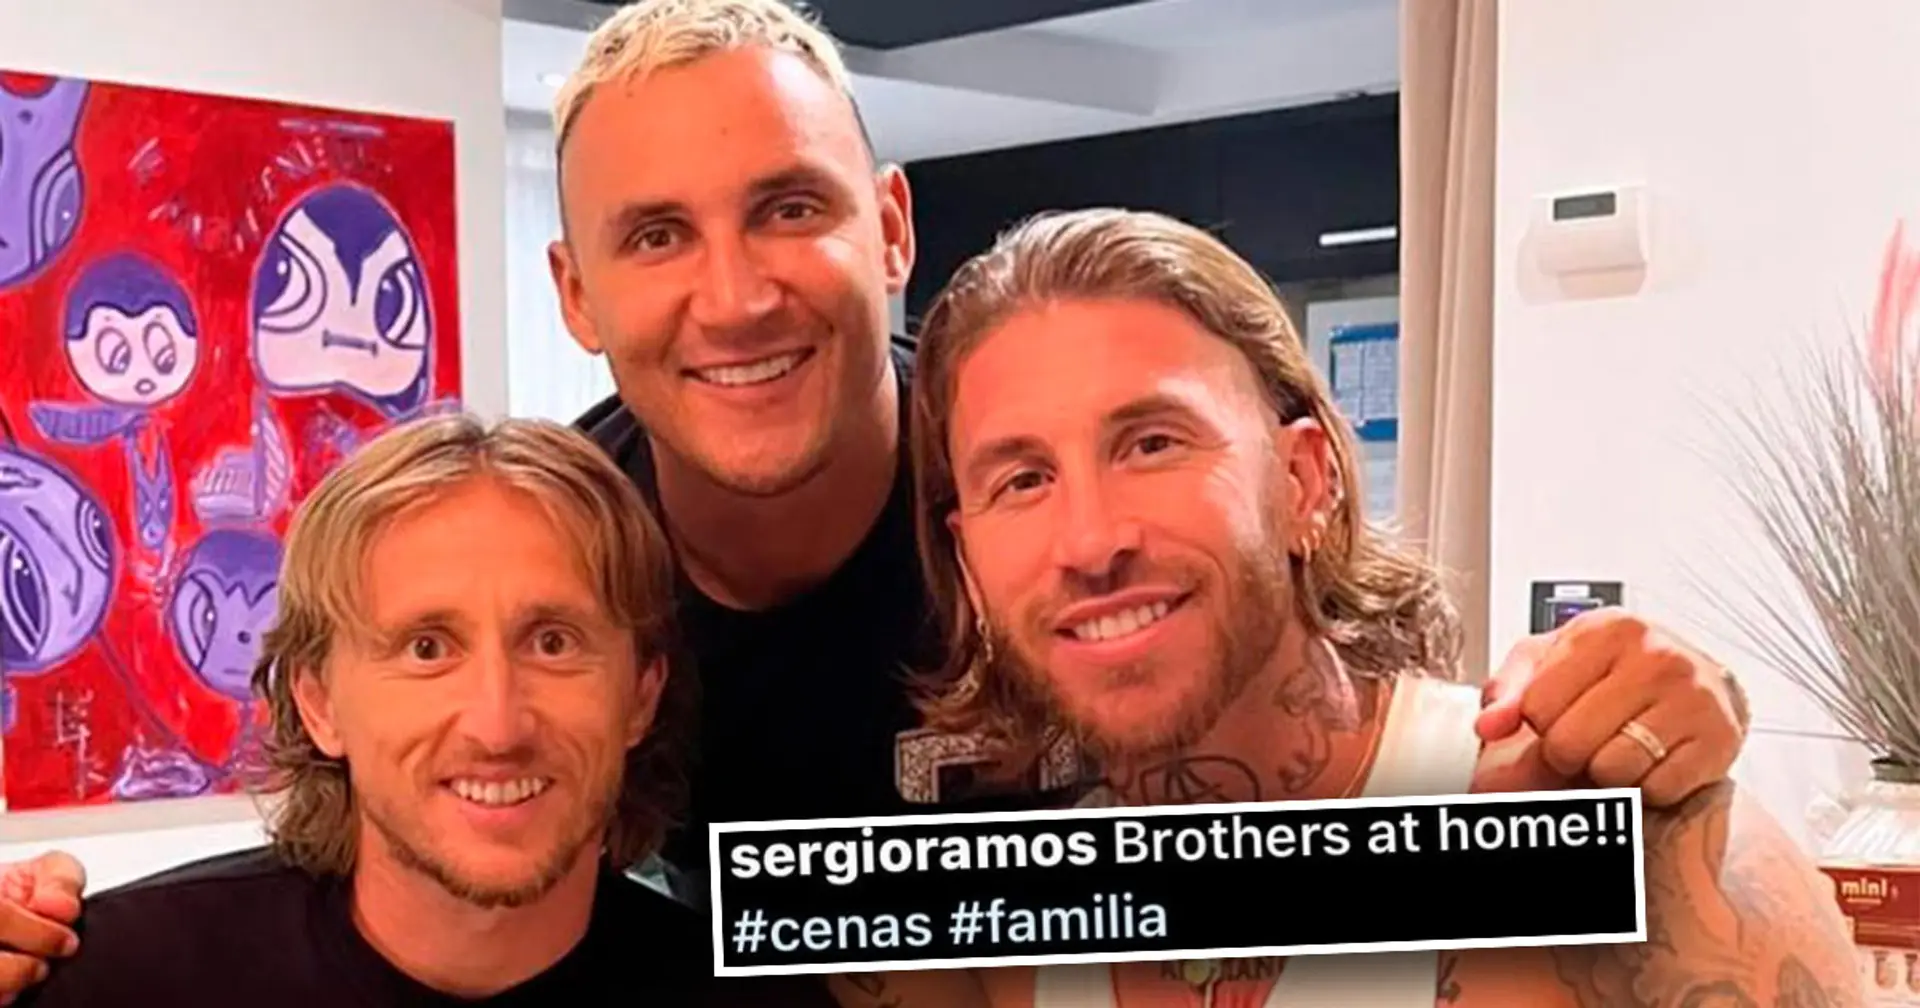 Sergio Ramos reunites with Navas and Modric at his own home